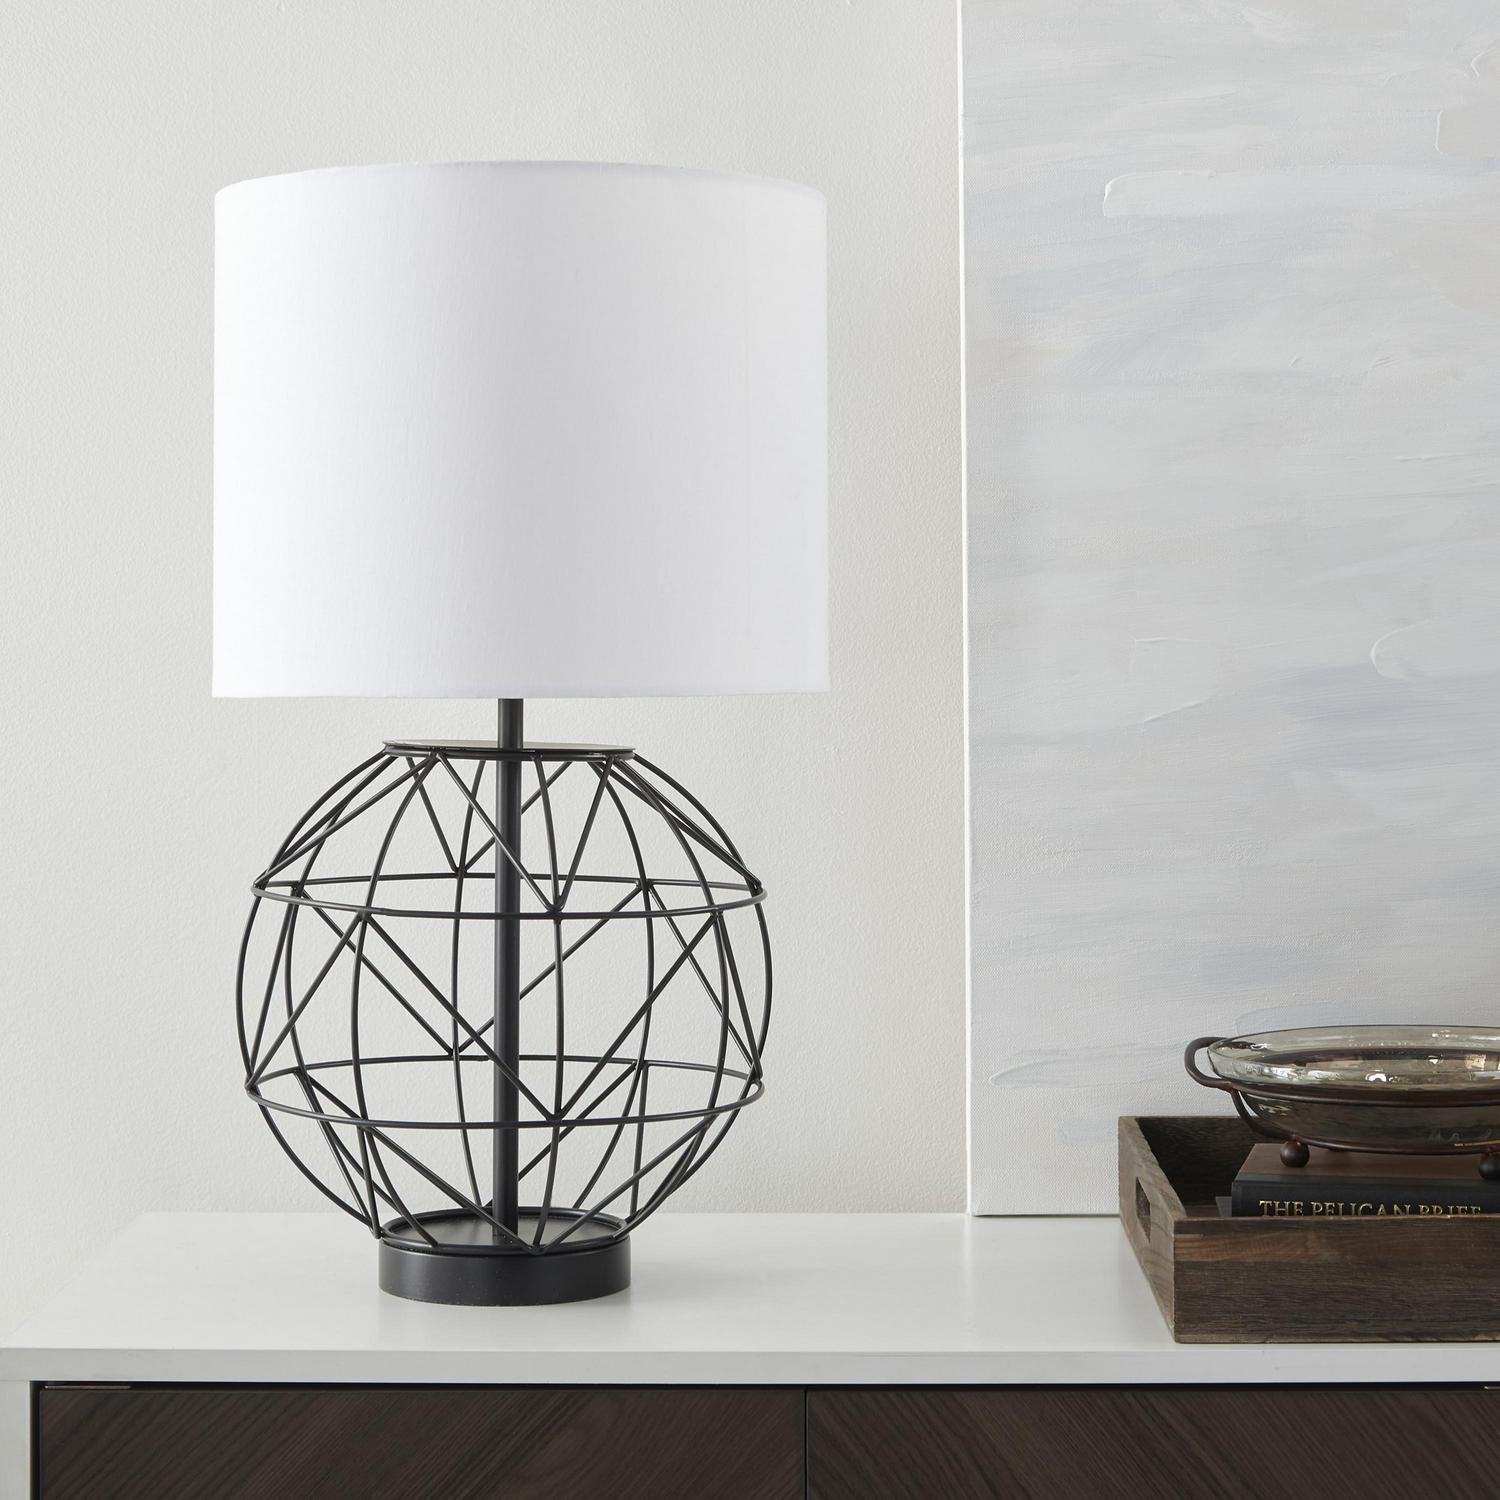 Nourison 22 Metal Globe Table Lamp， Modern， Industrial， Transitional for Bedroom， Living Room， Dining Room， Black